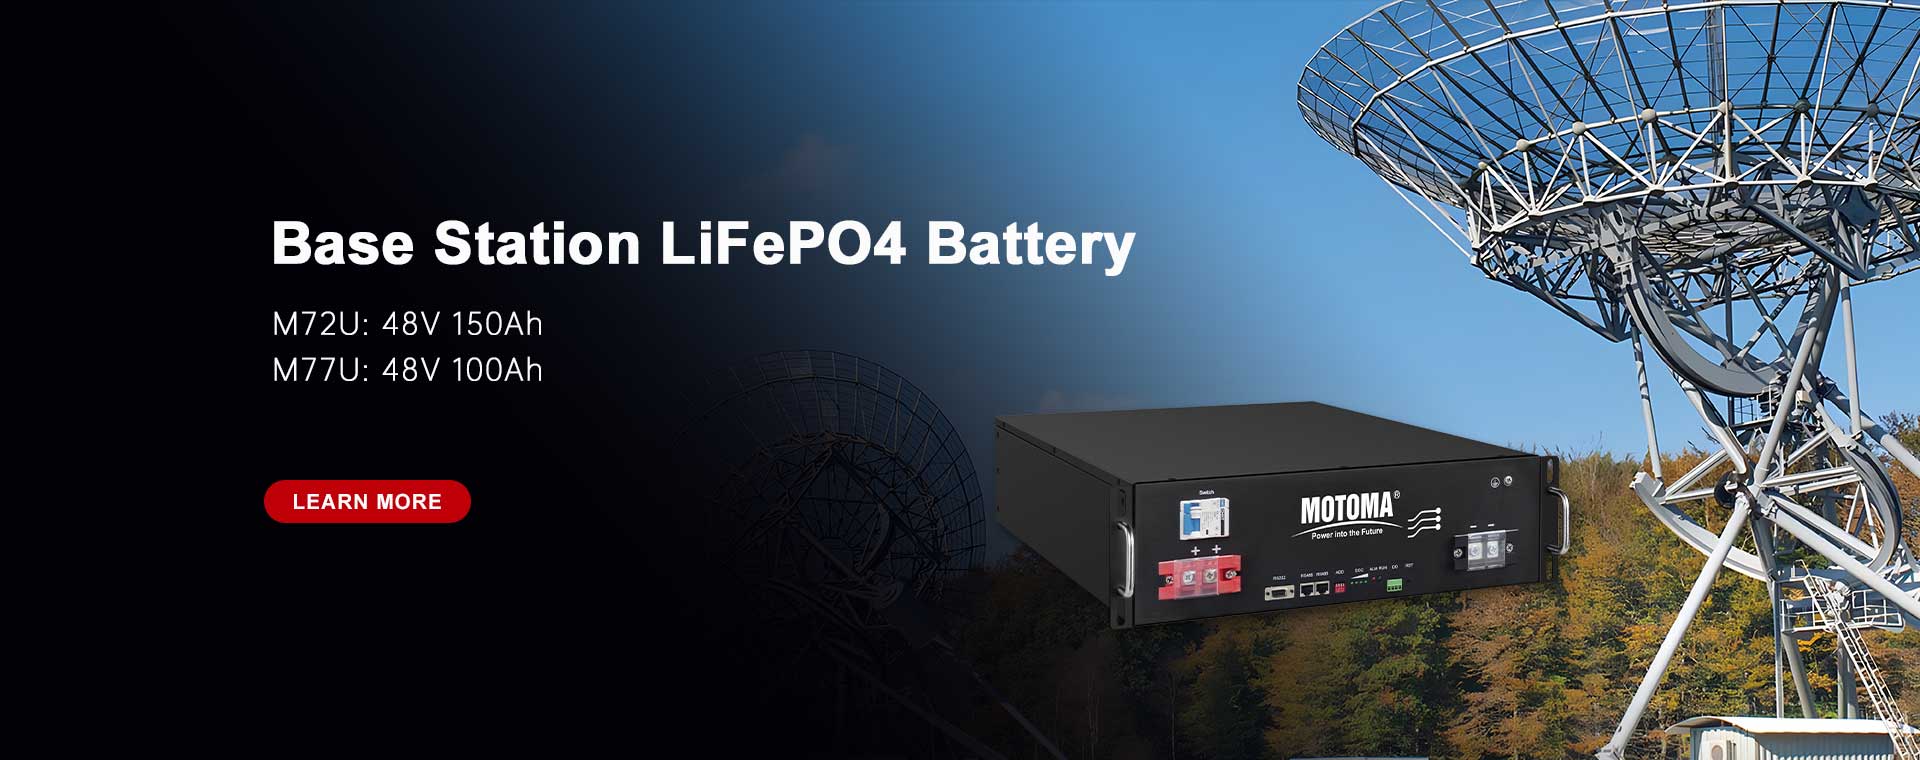 LiFePO4 base station battery